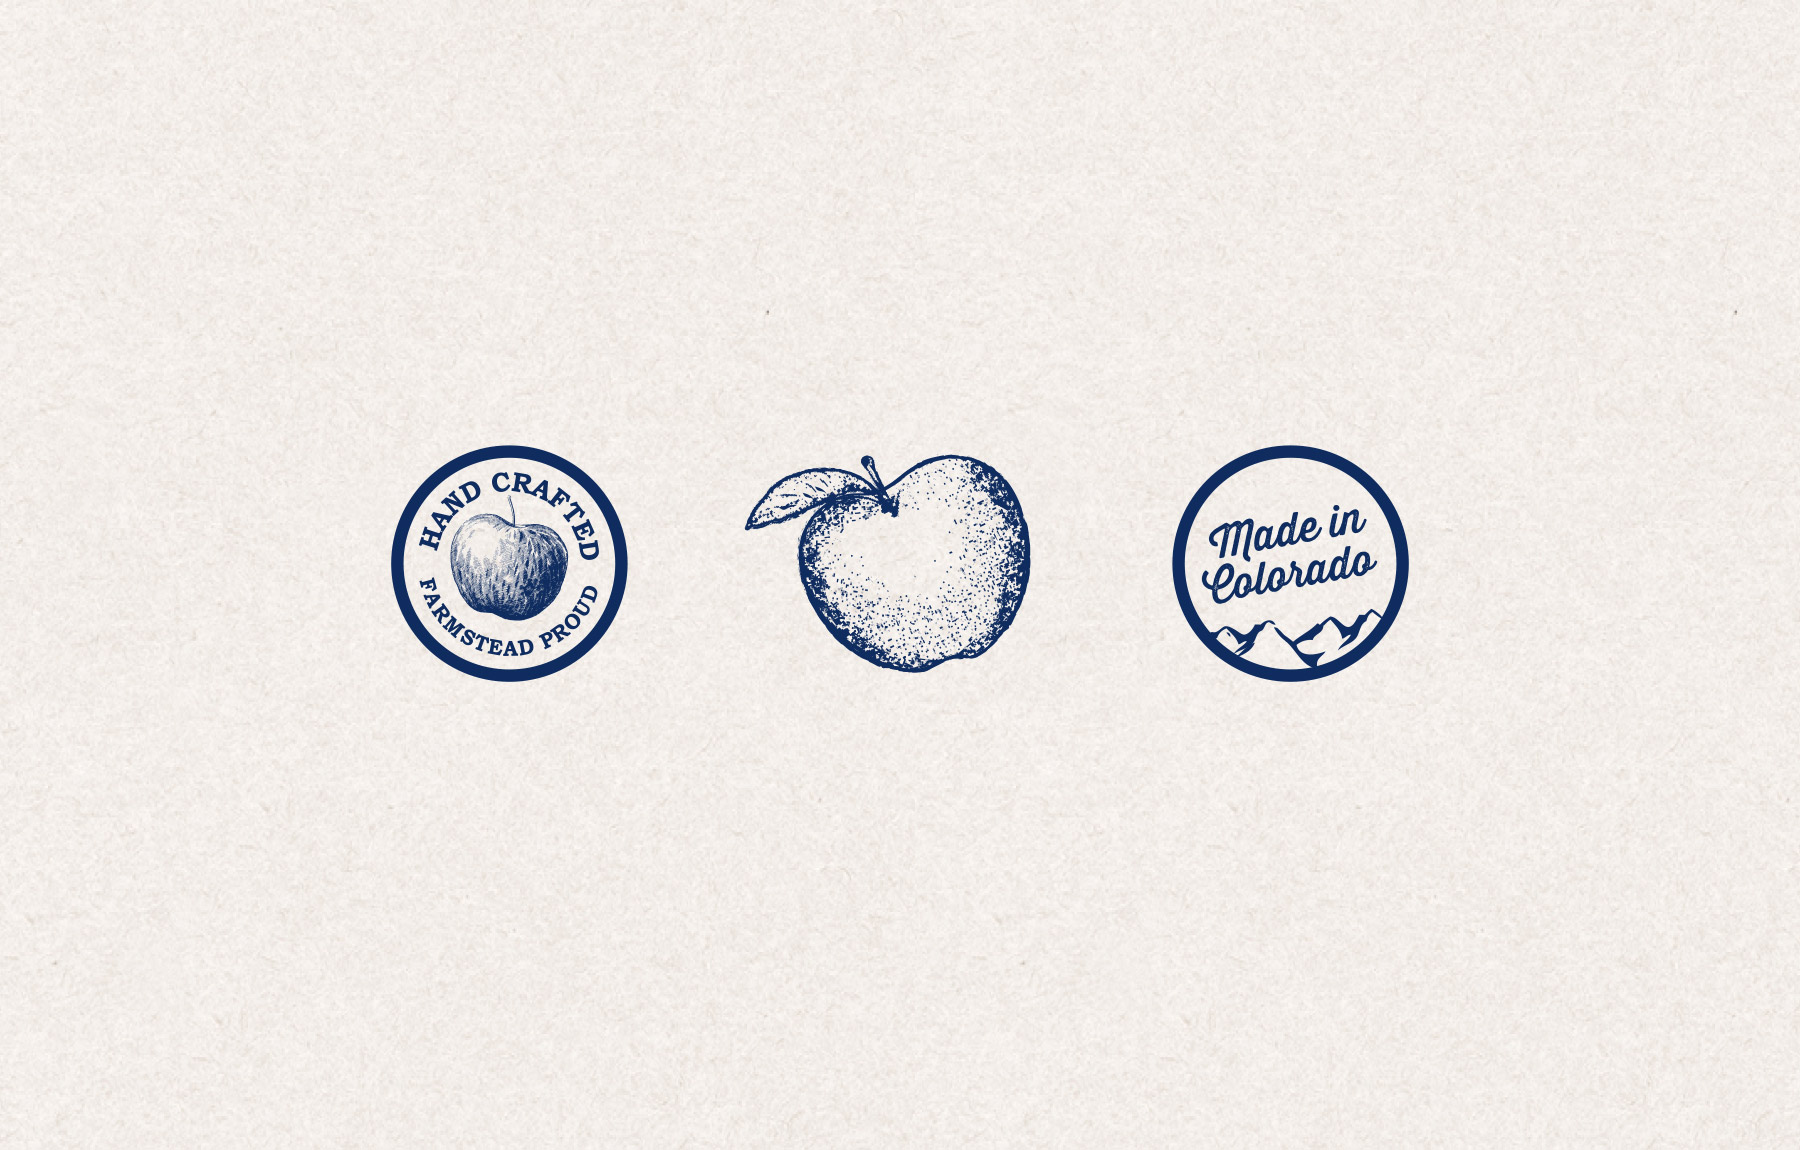 Rustic apple branding illustrations